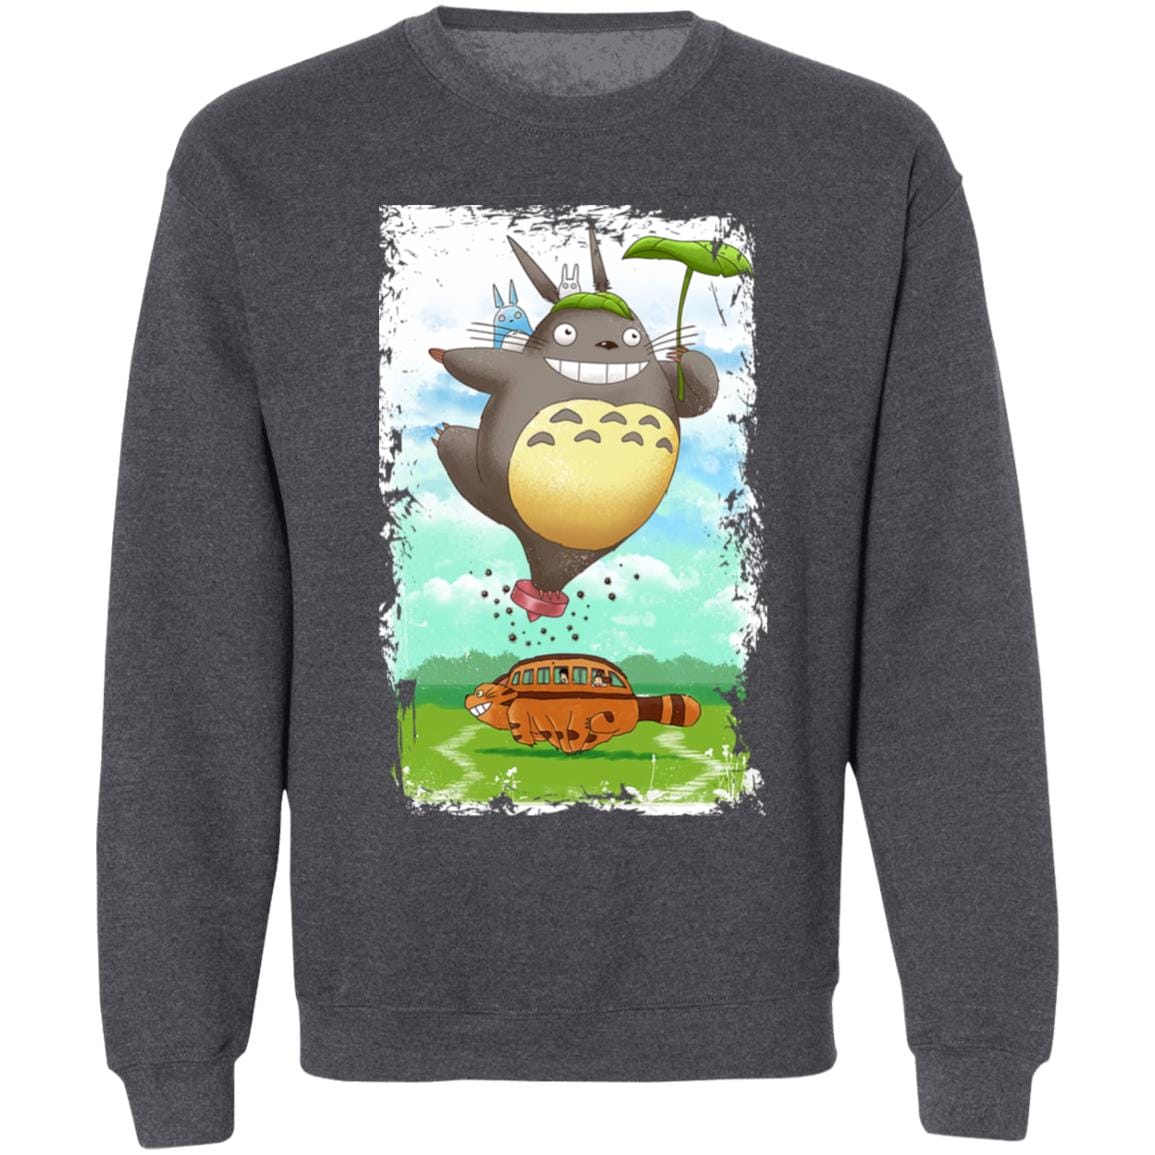 Totoro the Funny Neighbor Sweatshirt Ghibli Store ghibli.store